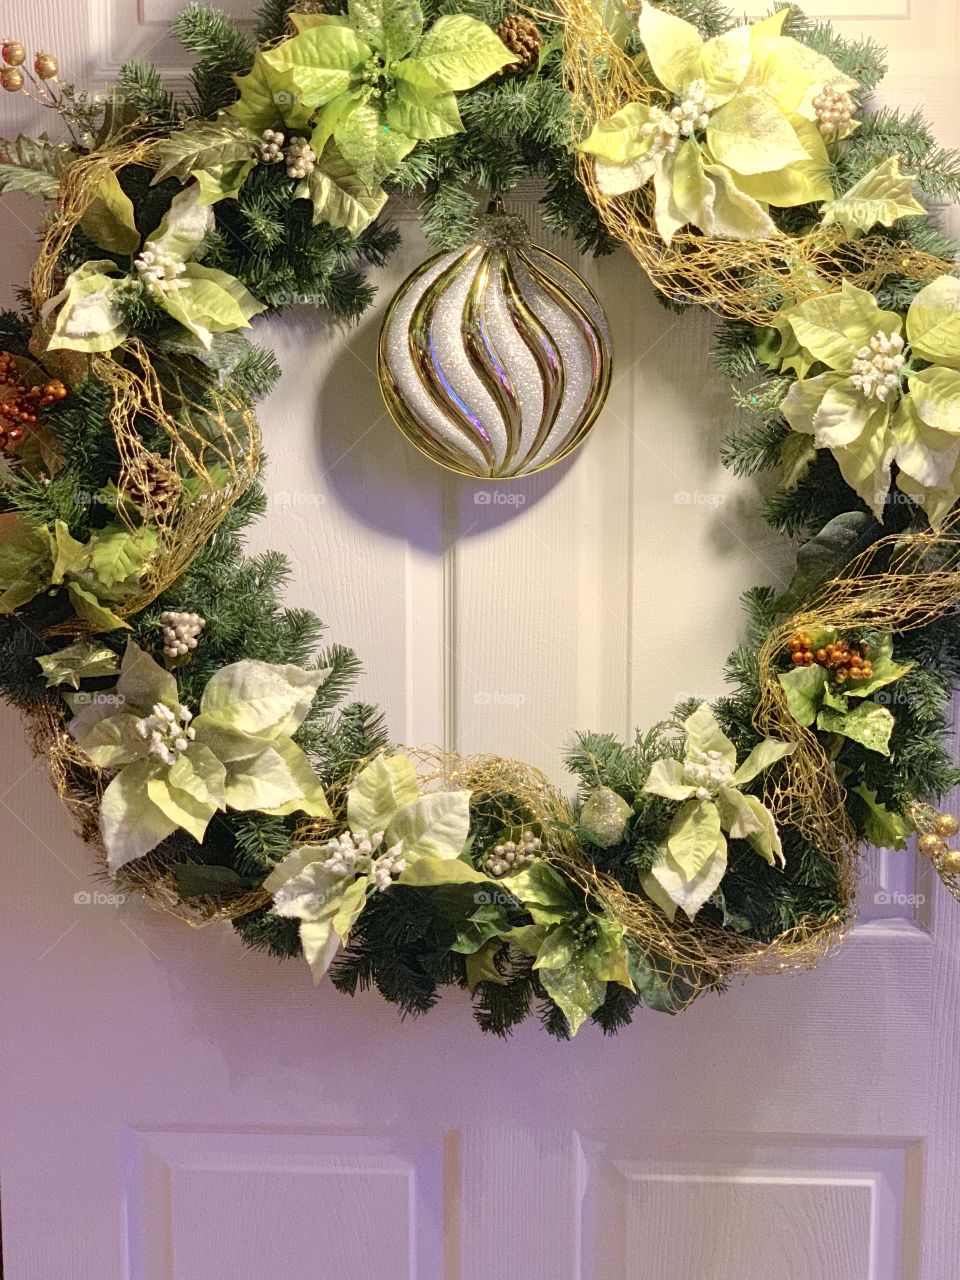 Christmas Wreath on the Front Door - white pointsettia, pine tree needles, ornament 